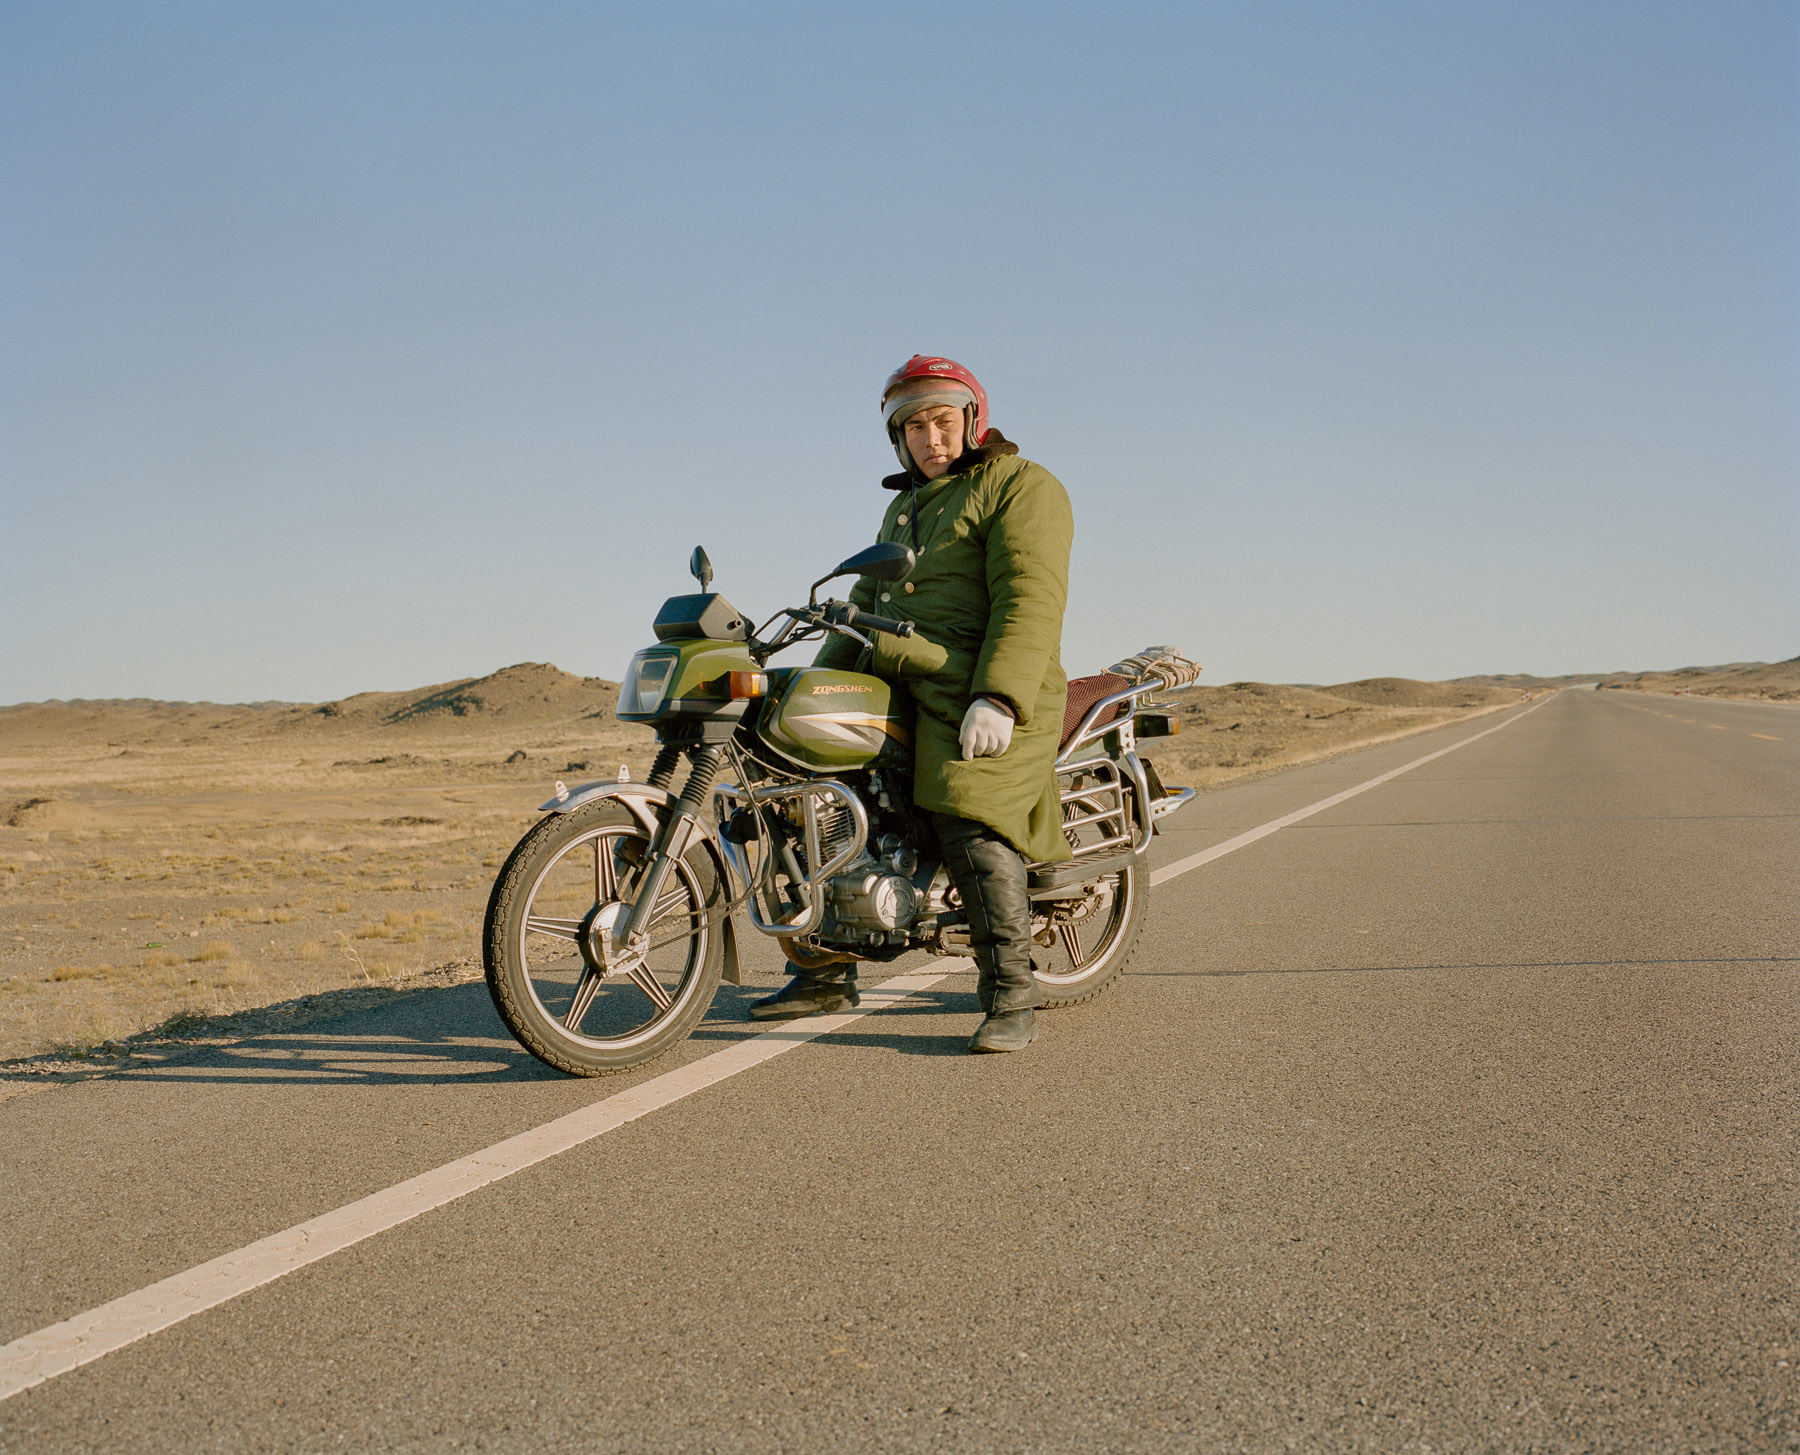  May 2016. Xinjiang province, China. Kazakh minority Chinese rider on a road in Northern Xinjiang province at the border with Khazakhstan.  